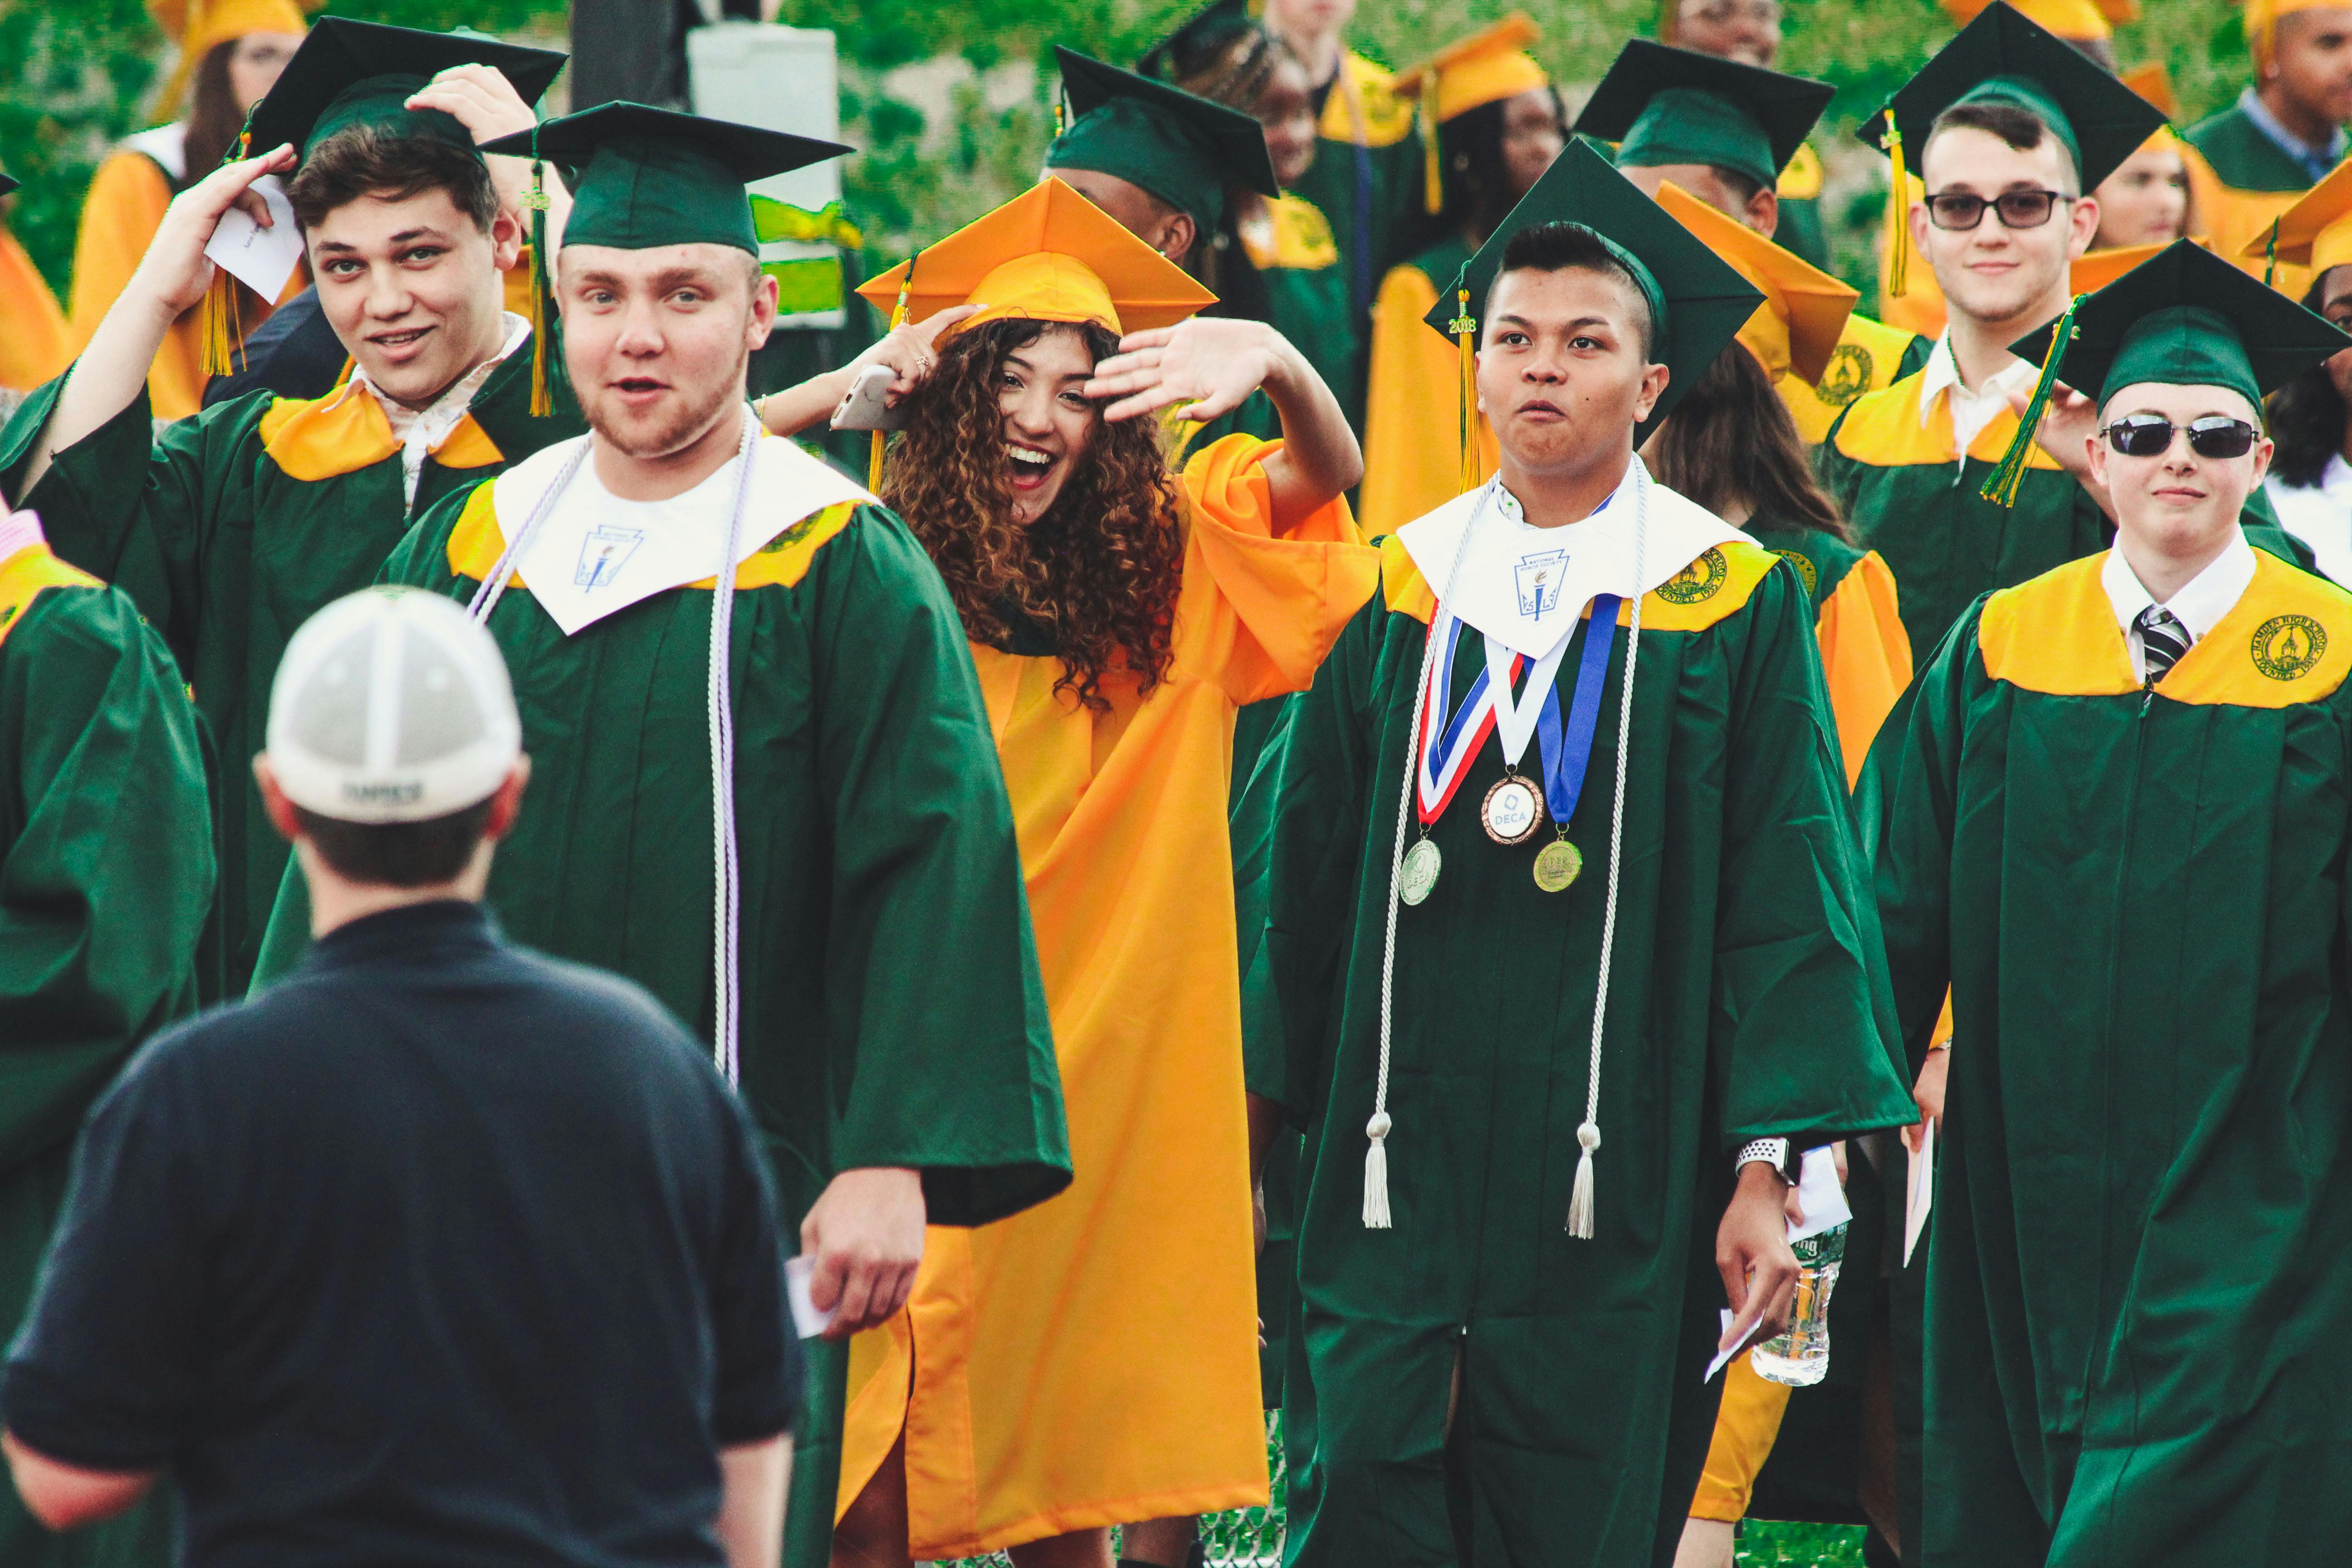 College graduates at a ceremony | Source: Pexels